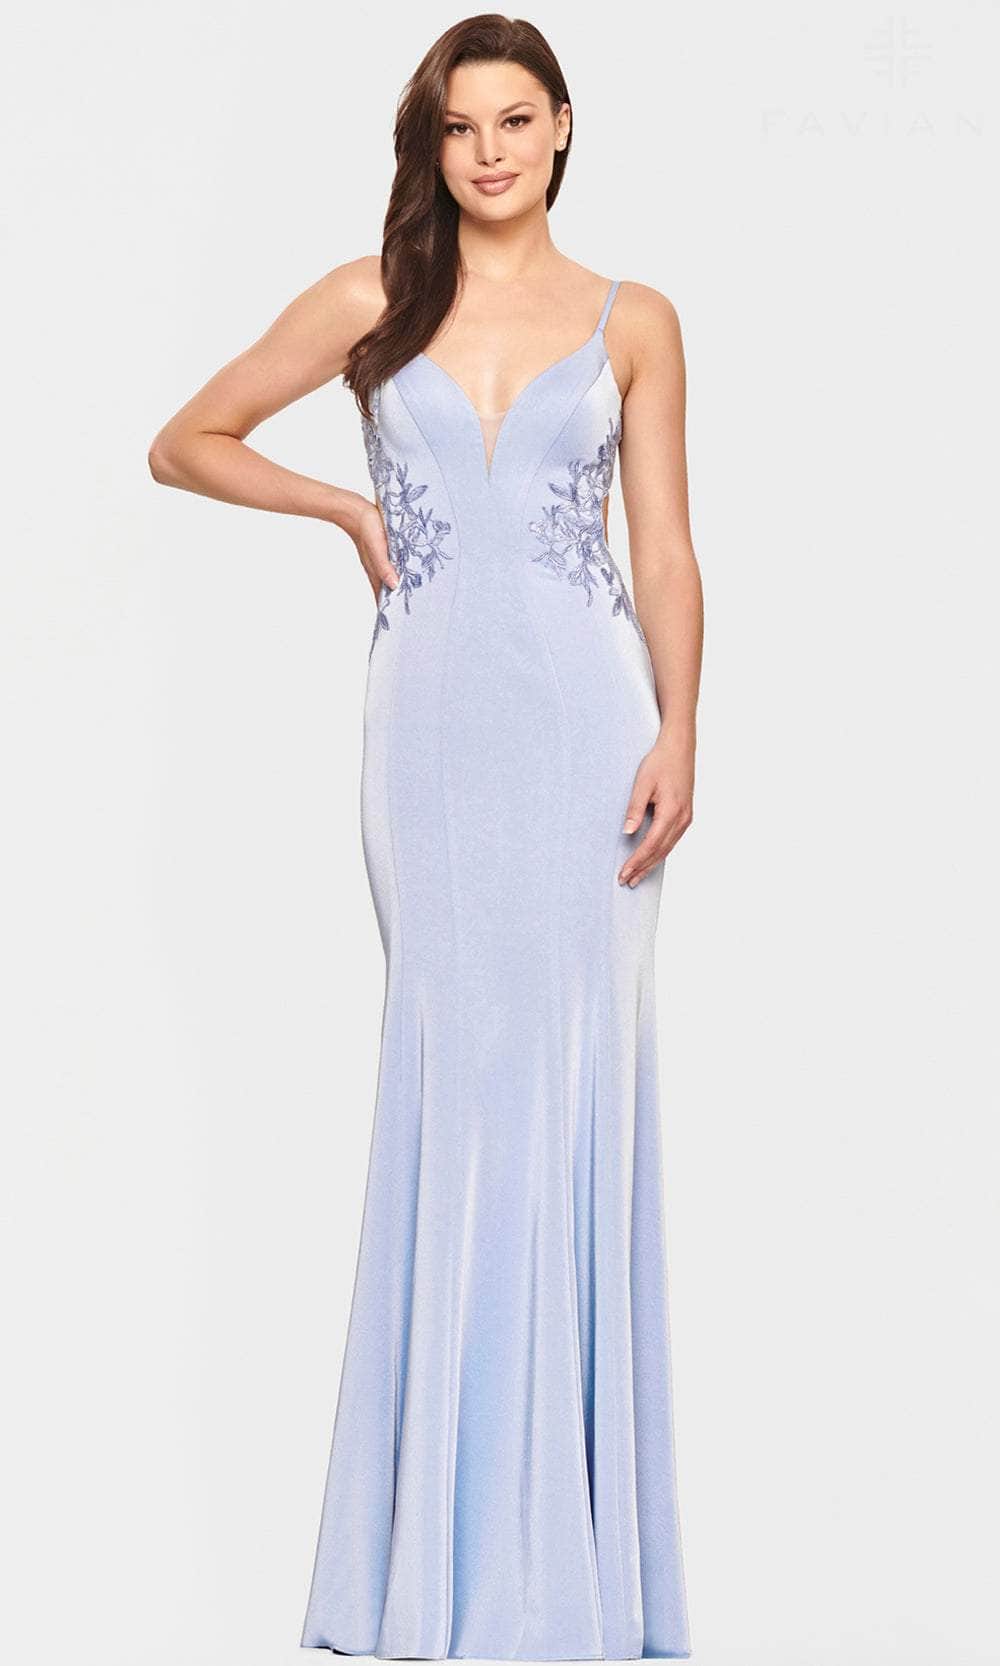 Faviana S10815 - Lace Applique Cutout Evening Gown
